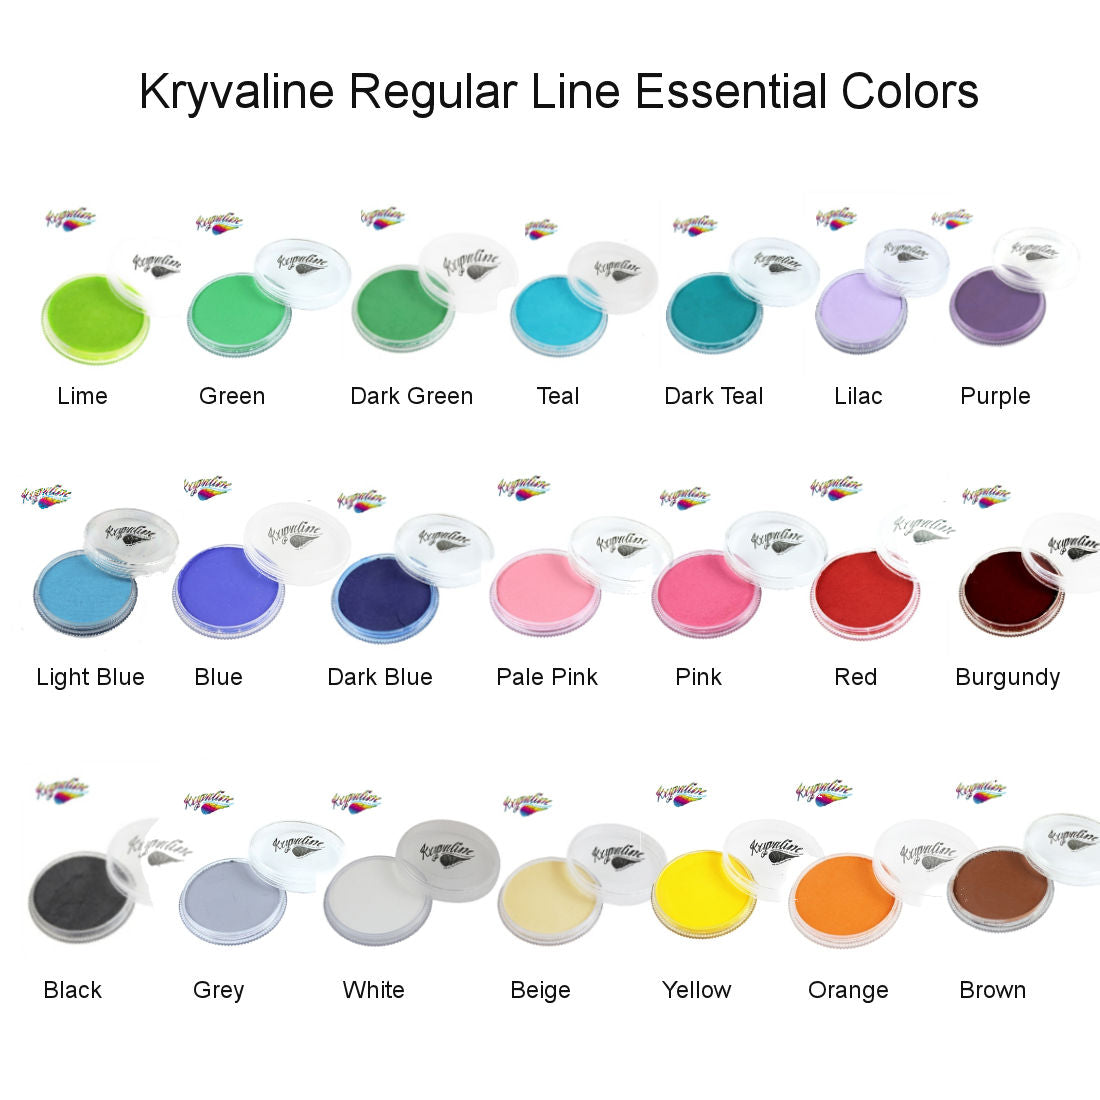 Regular Essential Colors 30g Lilac - Kryvaline Body Art Makeup | Glitter Tattoos, Face & Body Paint, Design - Kryvaline Body Art Makeup